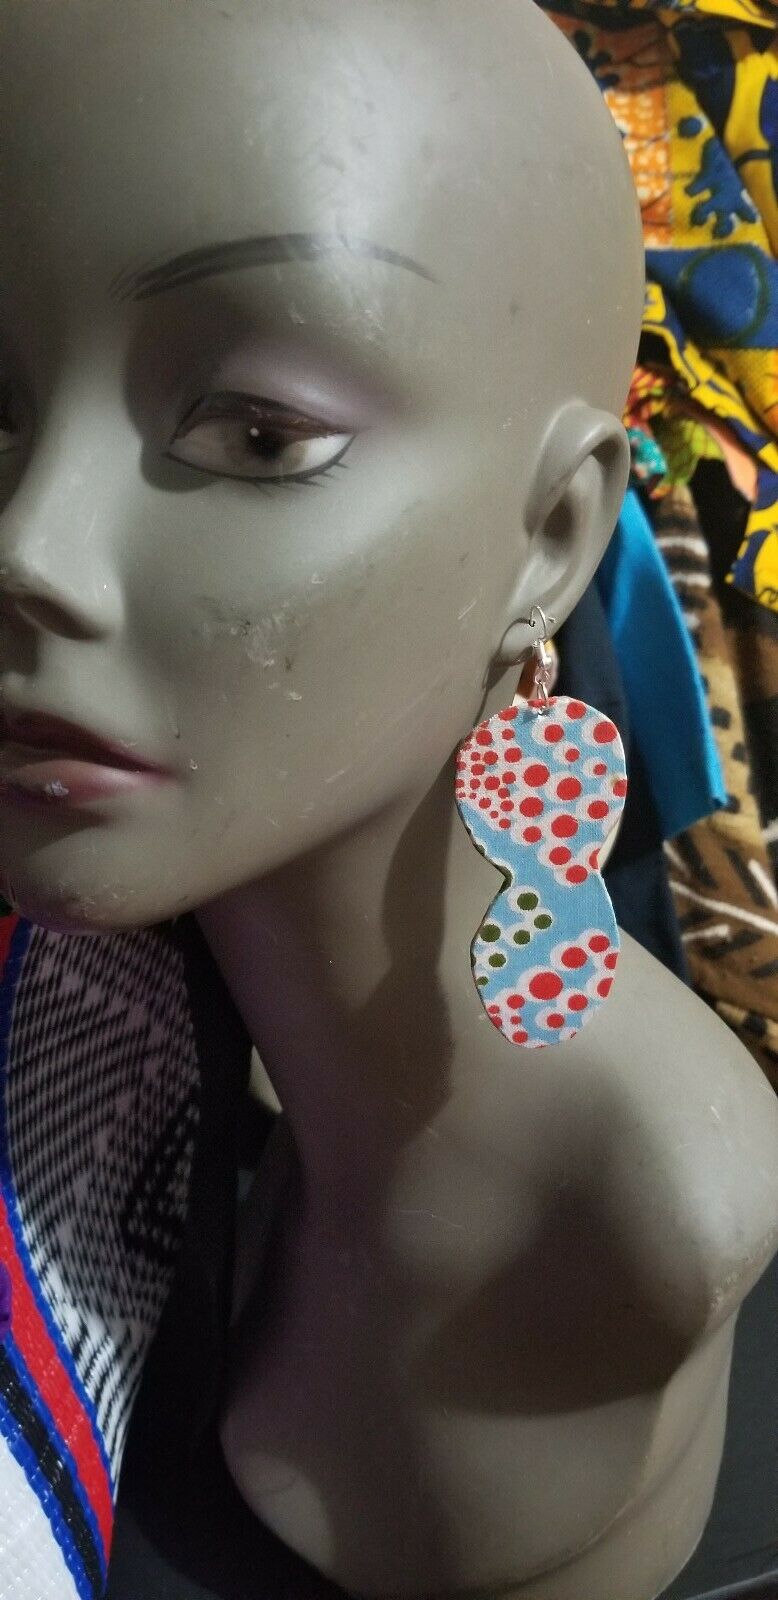 African Earrings Fabric Handmade with Tribal Ankara/waxprint 2pairs $10